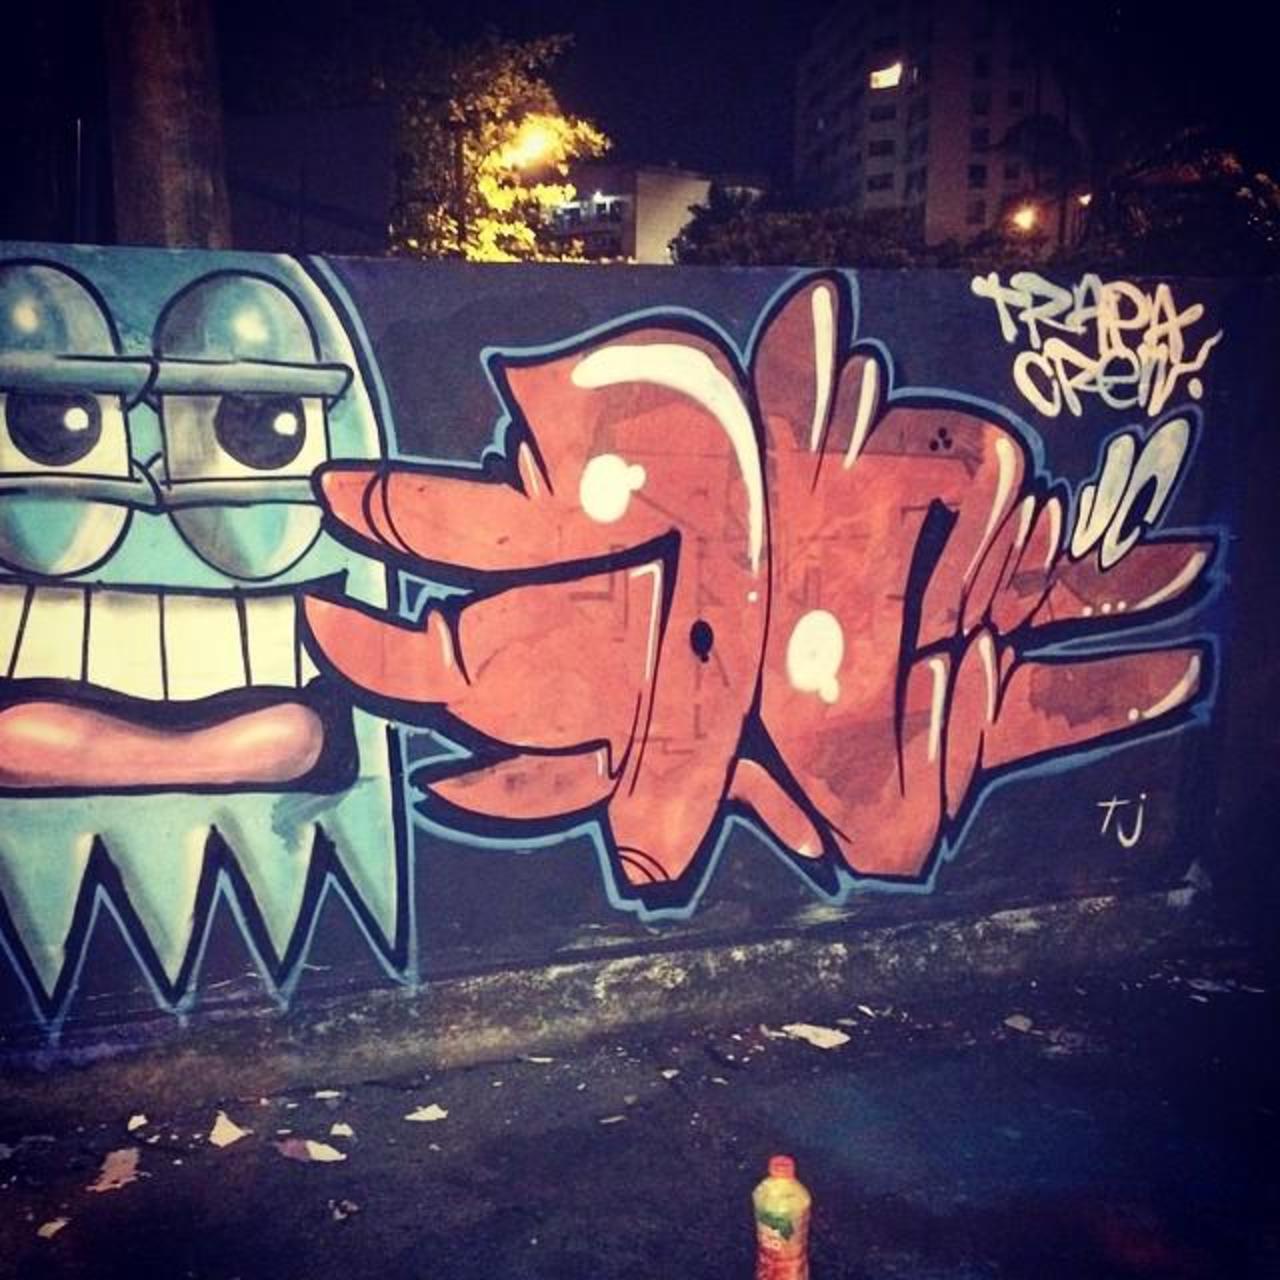 Zona sul ! Cast  JC ! ✨✨✨ #instaart #spray #riodejaneiro #rj #instagraffiti #graffiti #graffite #artederua #art #a… http://t.co/HZEZj1ROWo